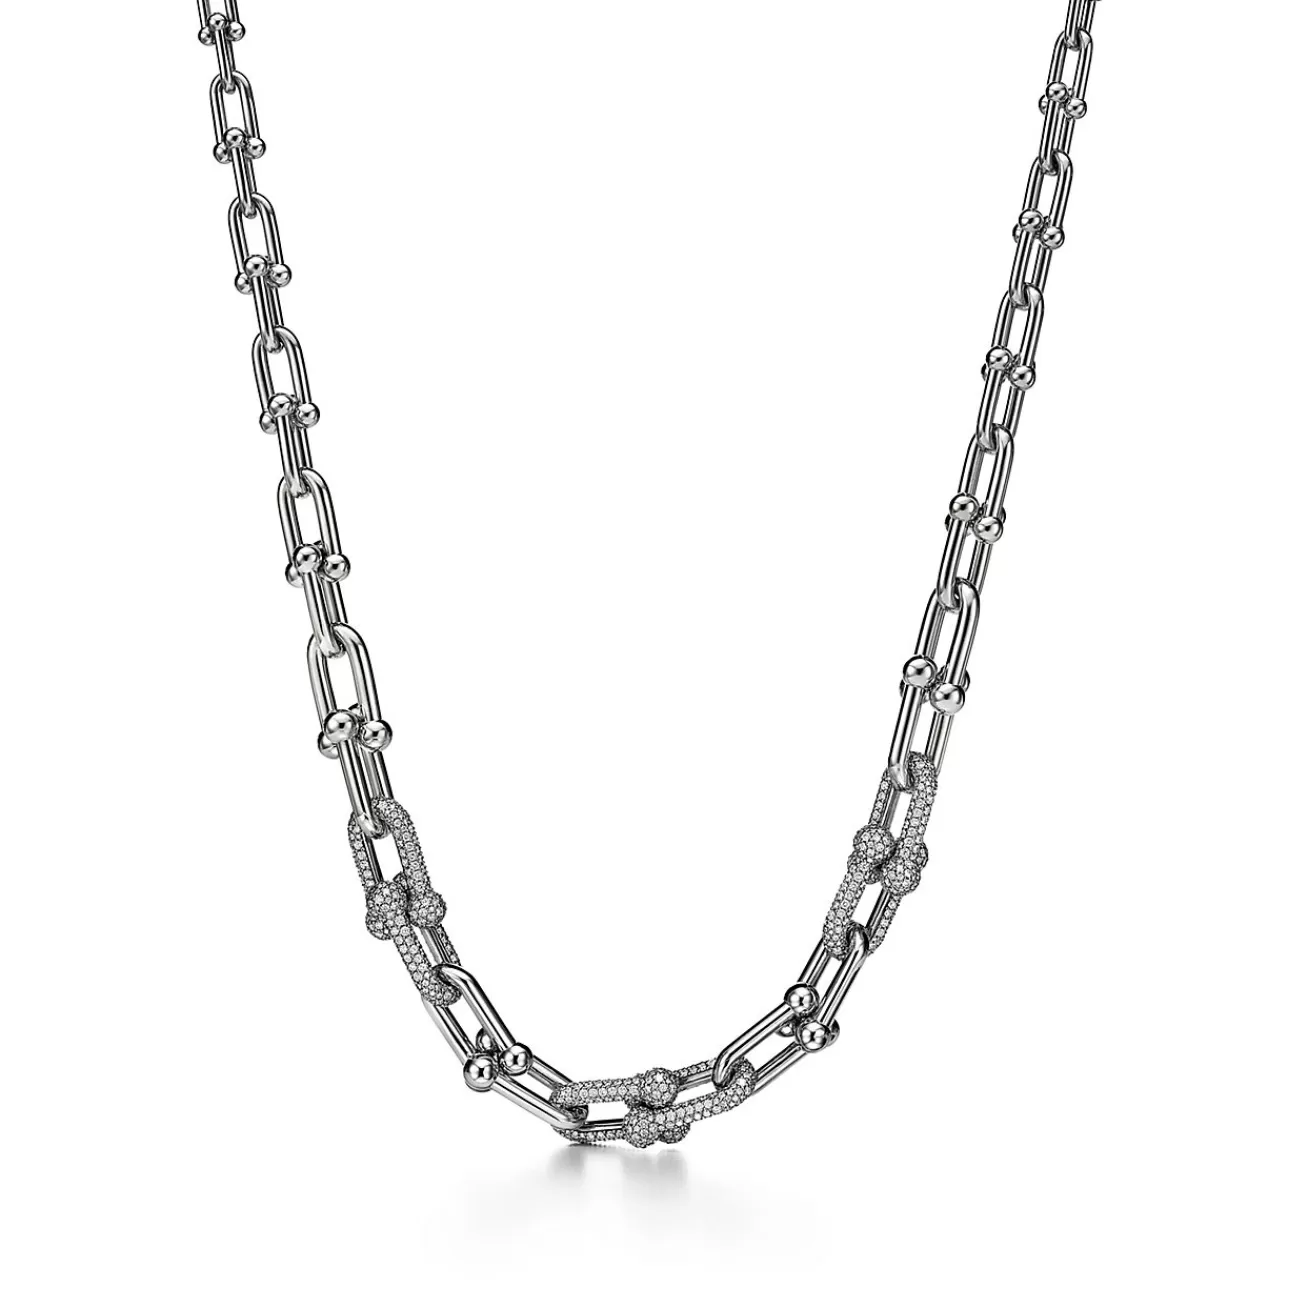 Tiffany & Co. Tiffany HardWear Graduated Link Necklace in White Gold with Pavé Diamonds | ^ Necklaces & Pendants | Diamond Jewelry